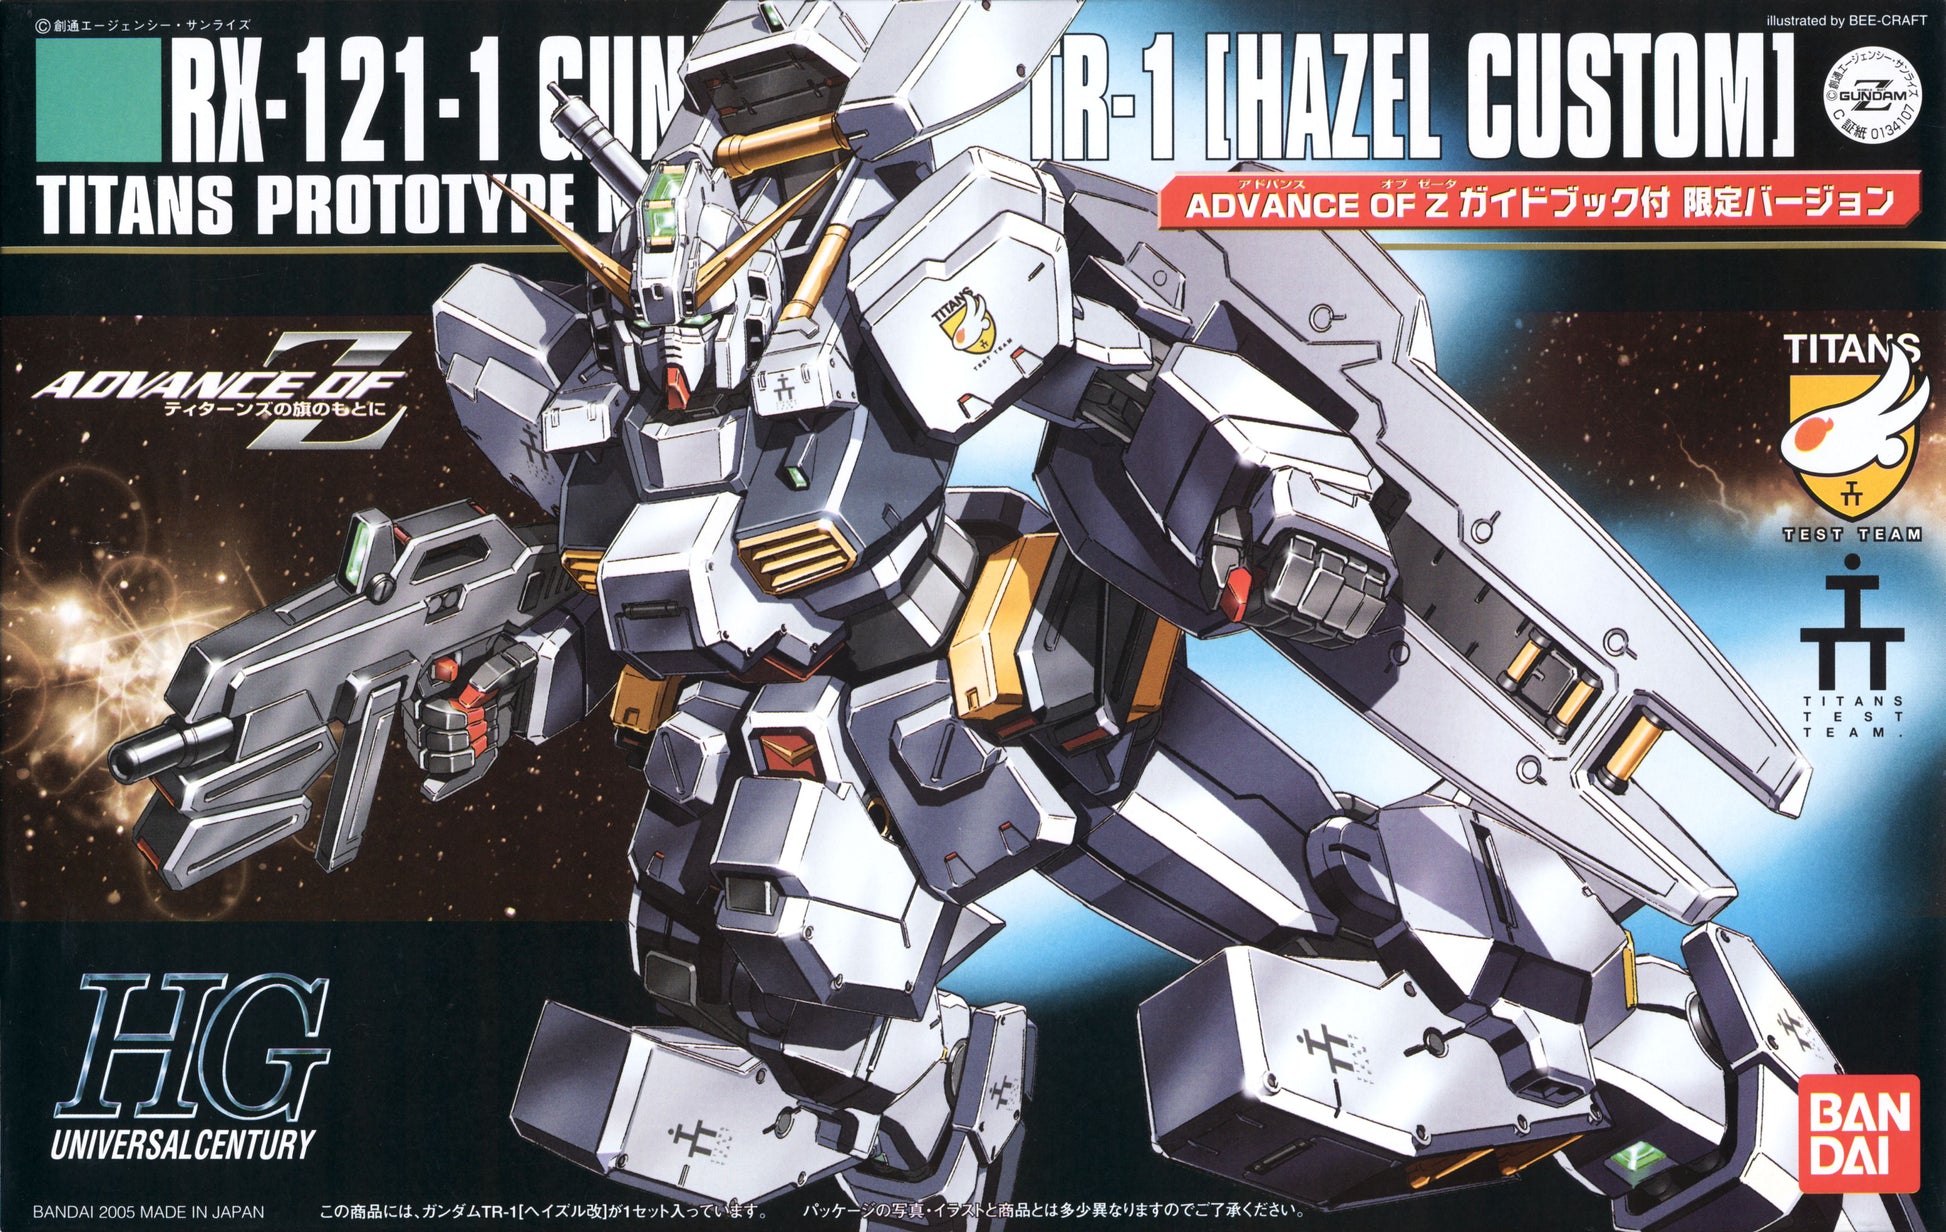 HGUC 1/144 Gundam TR-1 Hazel Custom - High Grade Advance of Zeta: The Flag of Titans | Glacier Hobbies